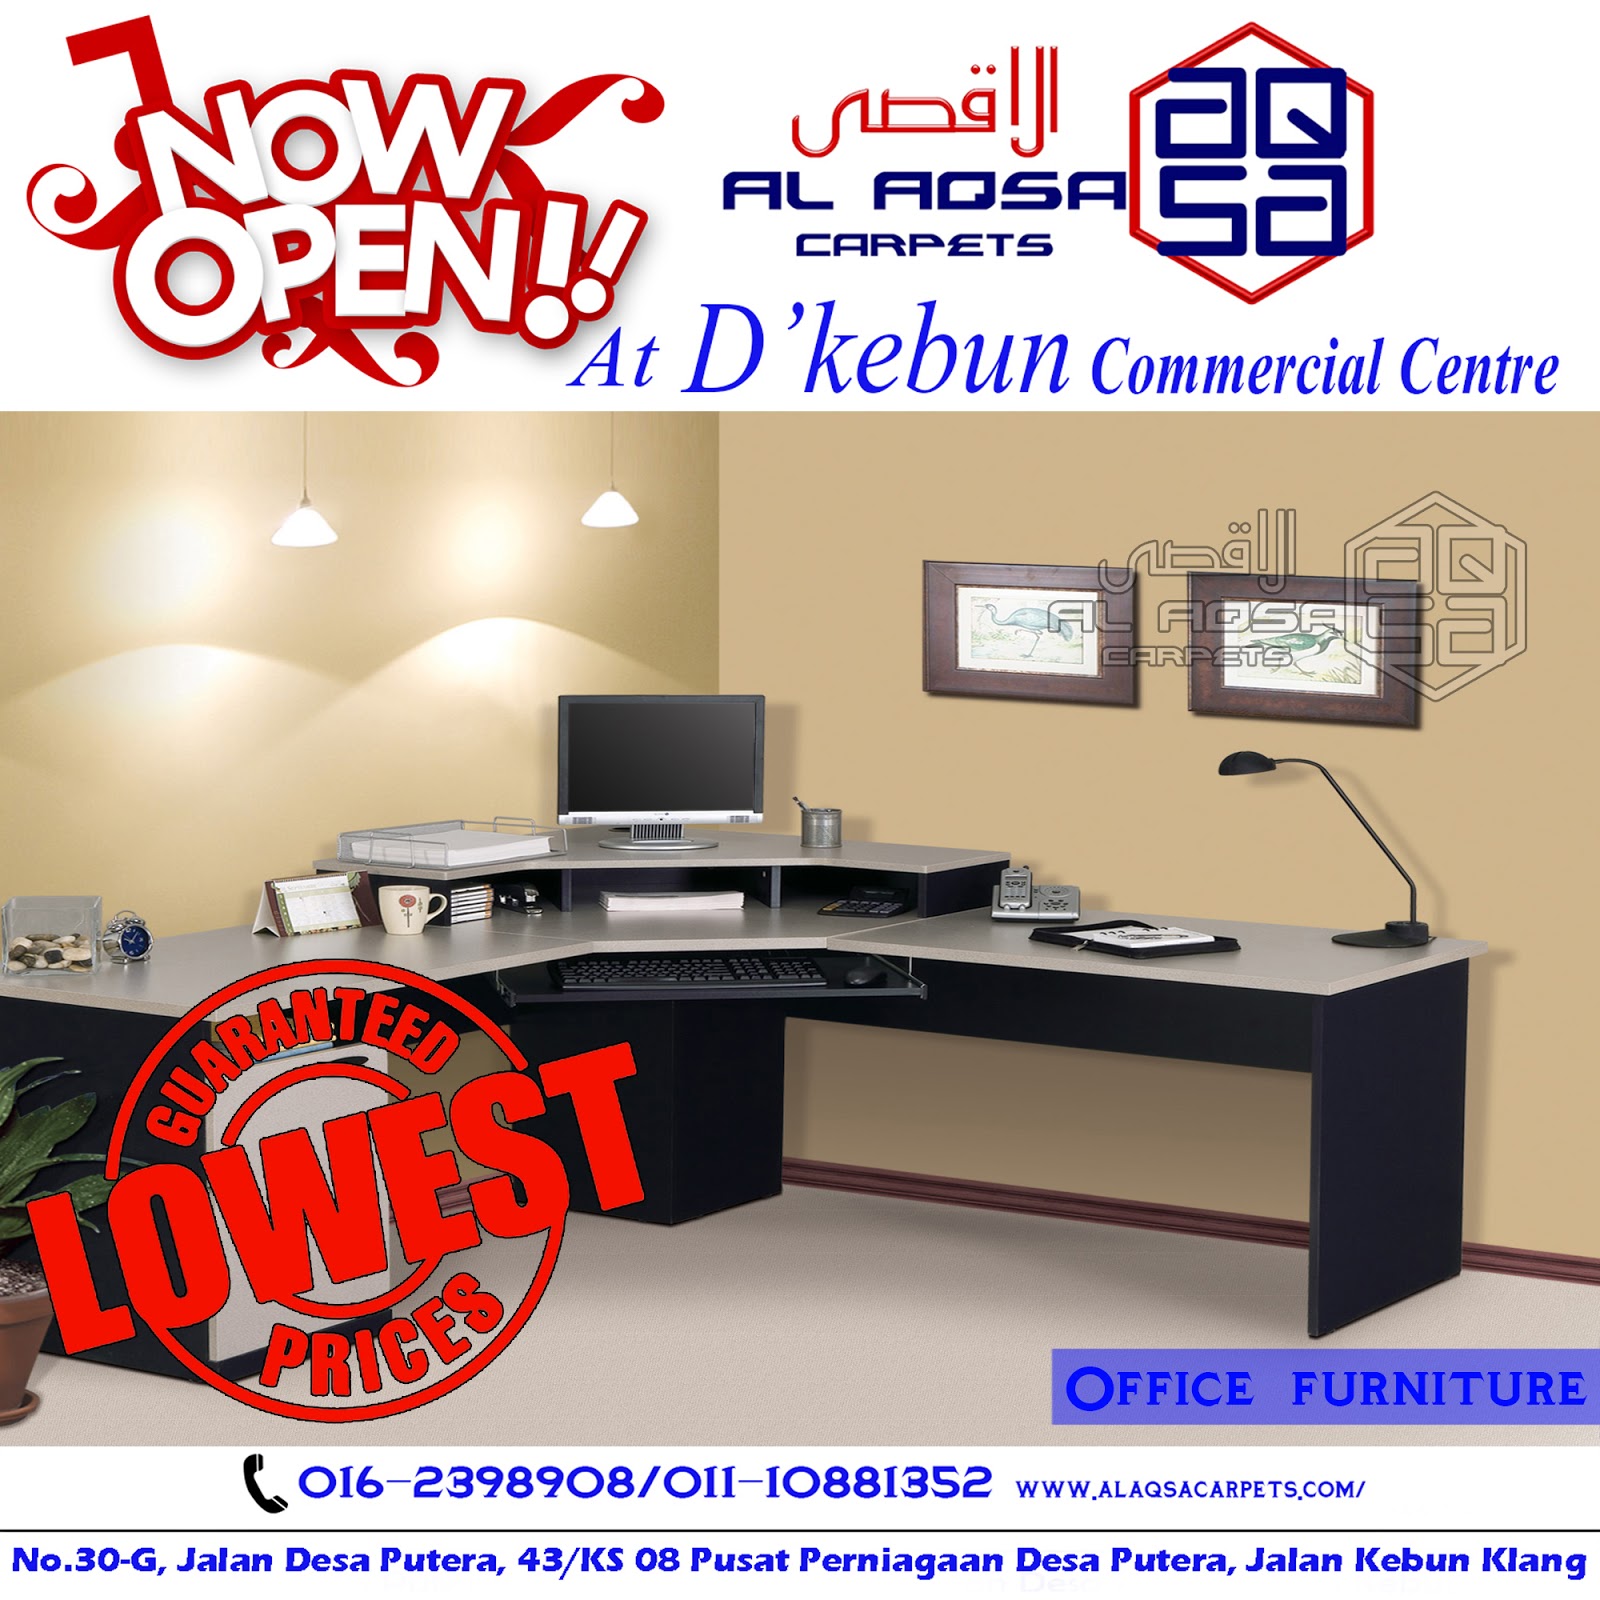 AlAqsa-Carpets-at-Dkebun-Commercial-Centre-Lowest-Price-Guaranteed-Office-Furniture-Murah%2B%2523AlaqsaCarpets.jpg